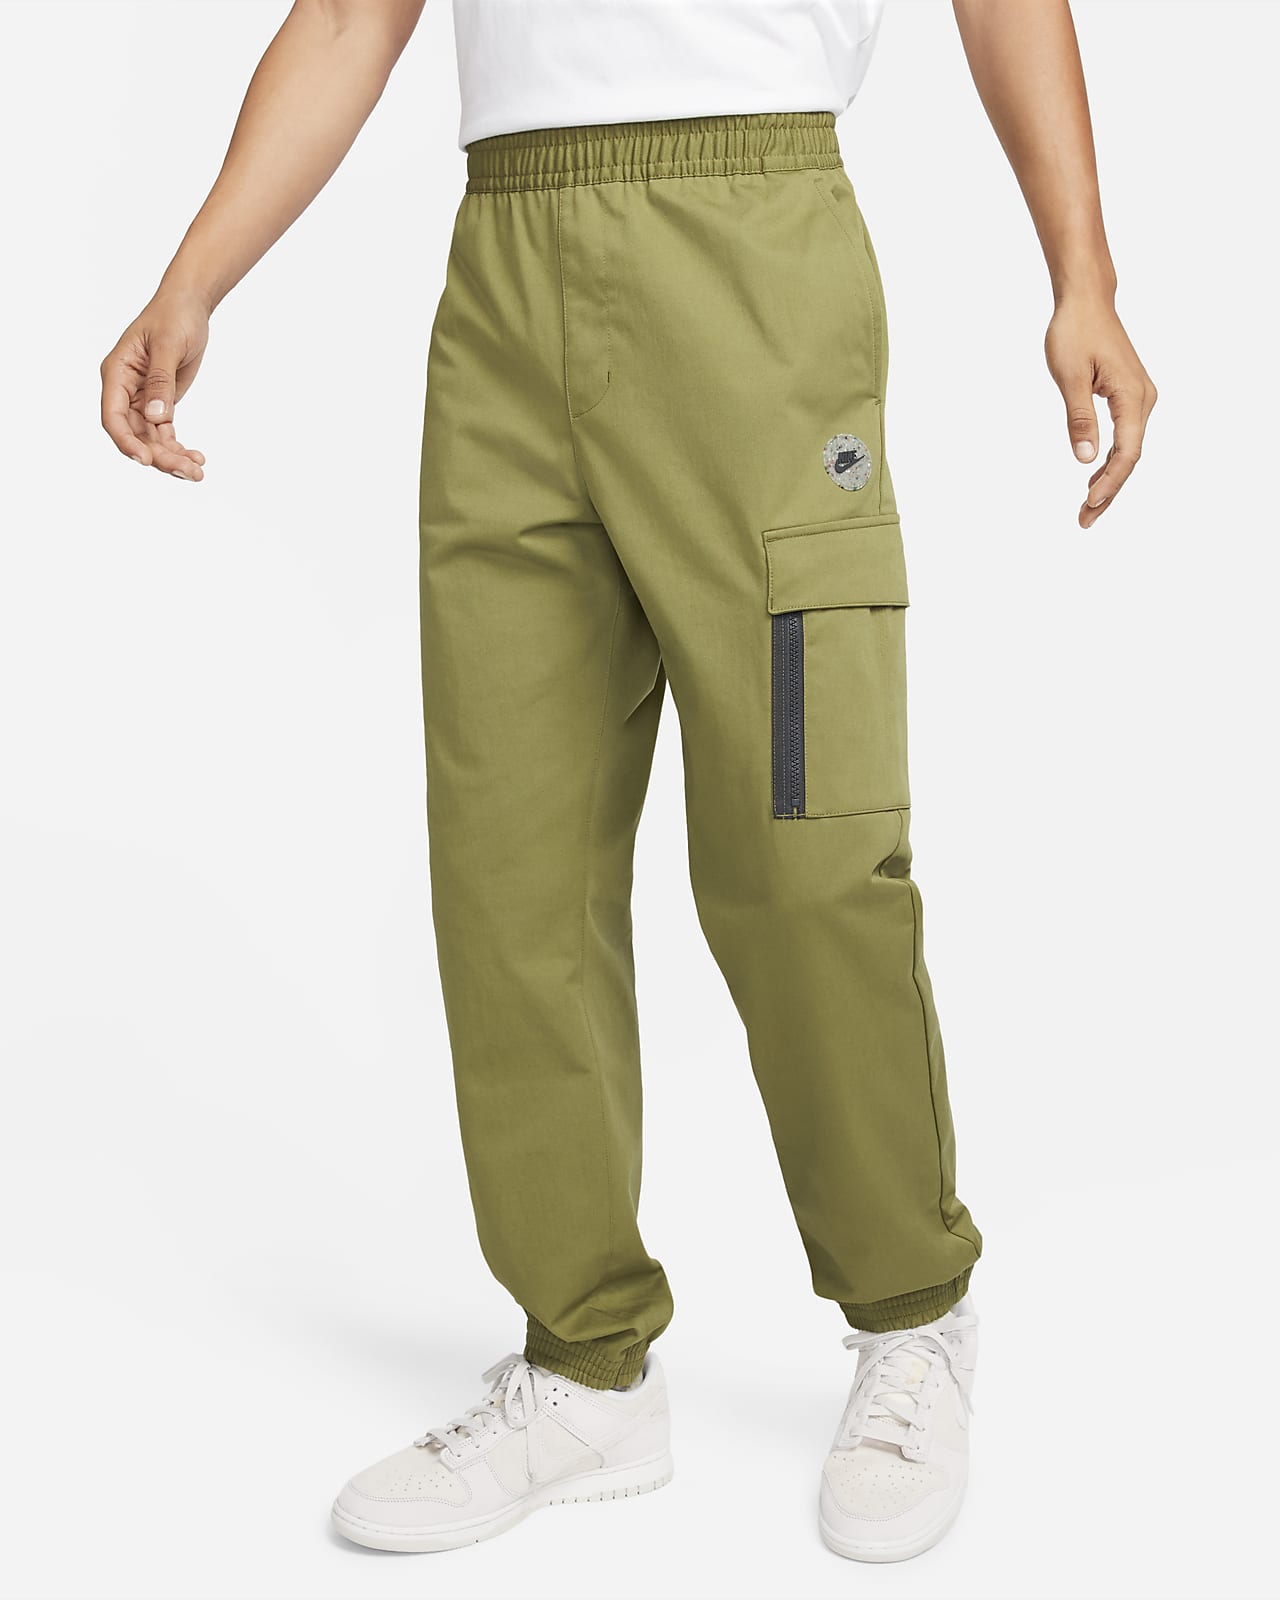 Pantalones tejido Woven funcionales deportivos para hombre Nike Sportswear. Nike.com